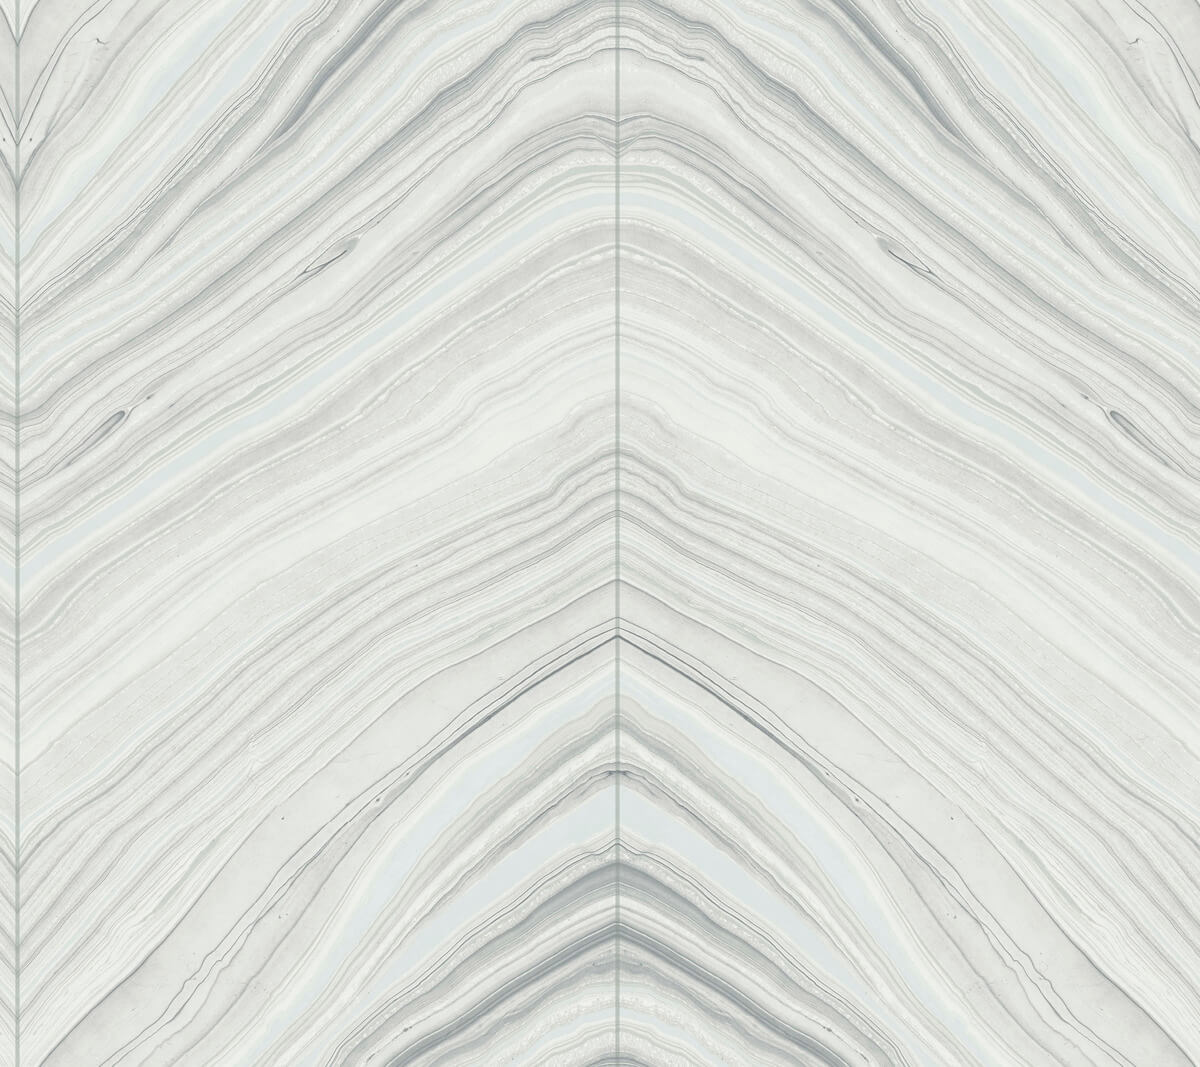 Candice Olson Modern Artisan II Onyx Strata Wallpaper - Gray